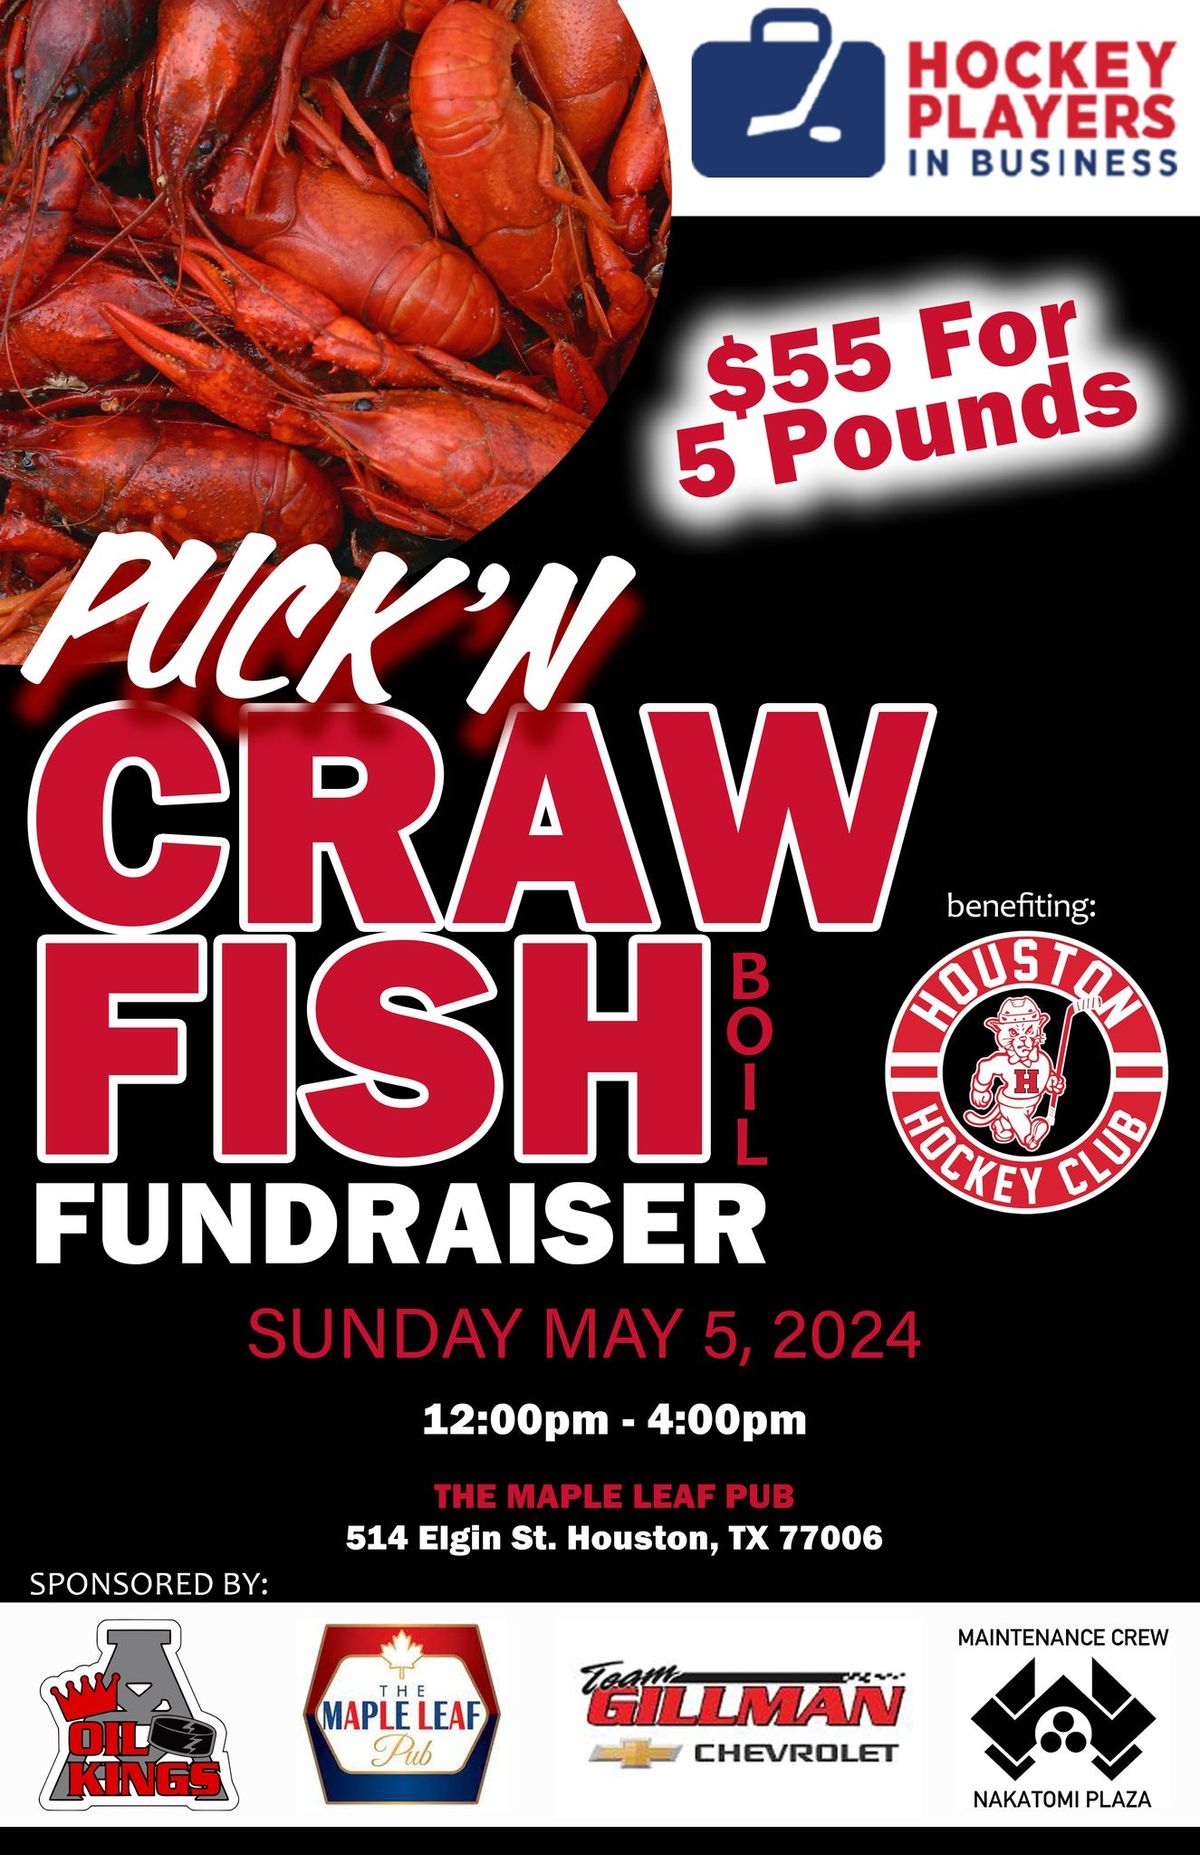 2024 Puck "N" Crawfish Boil fundraiser benefitting UH Ice Hockey